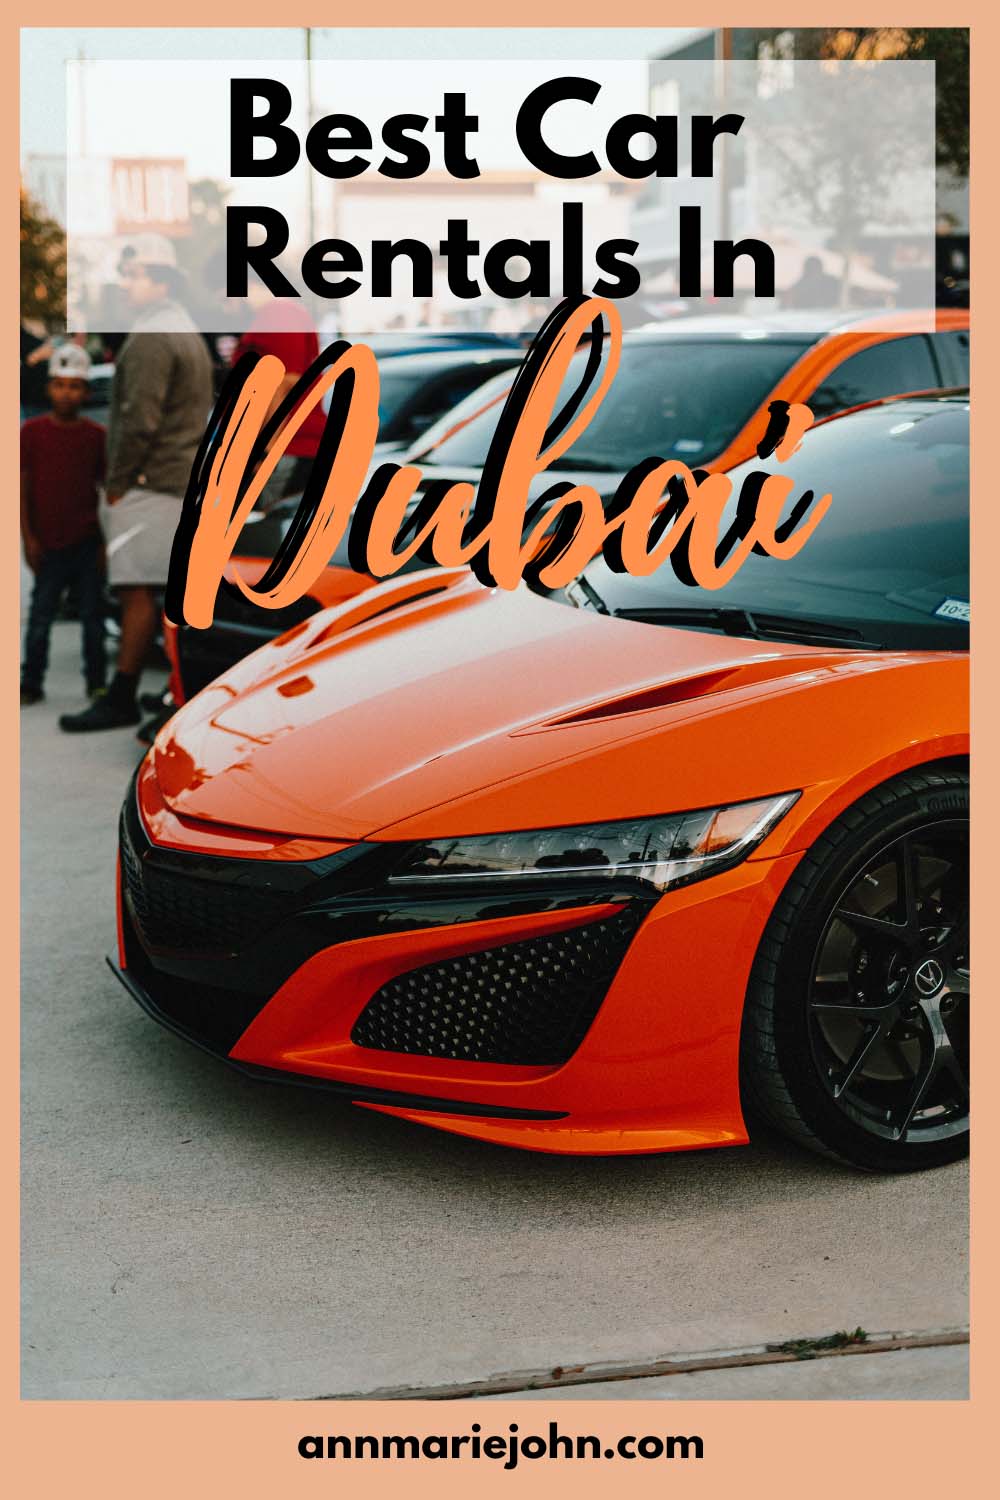 Best Car Rentals in Dubai